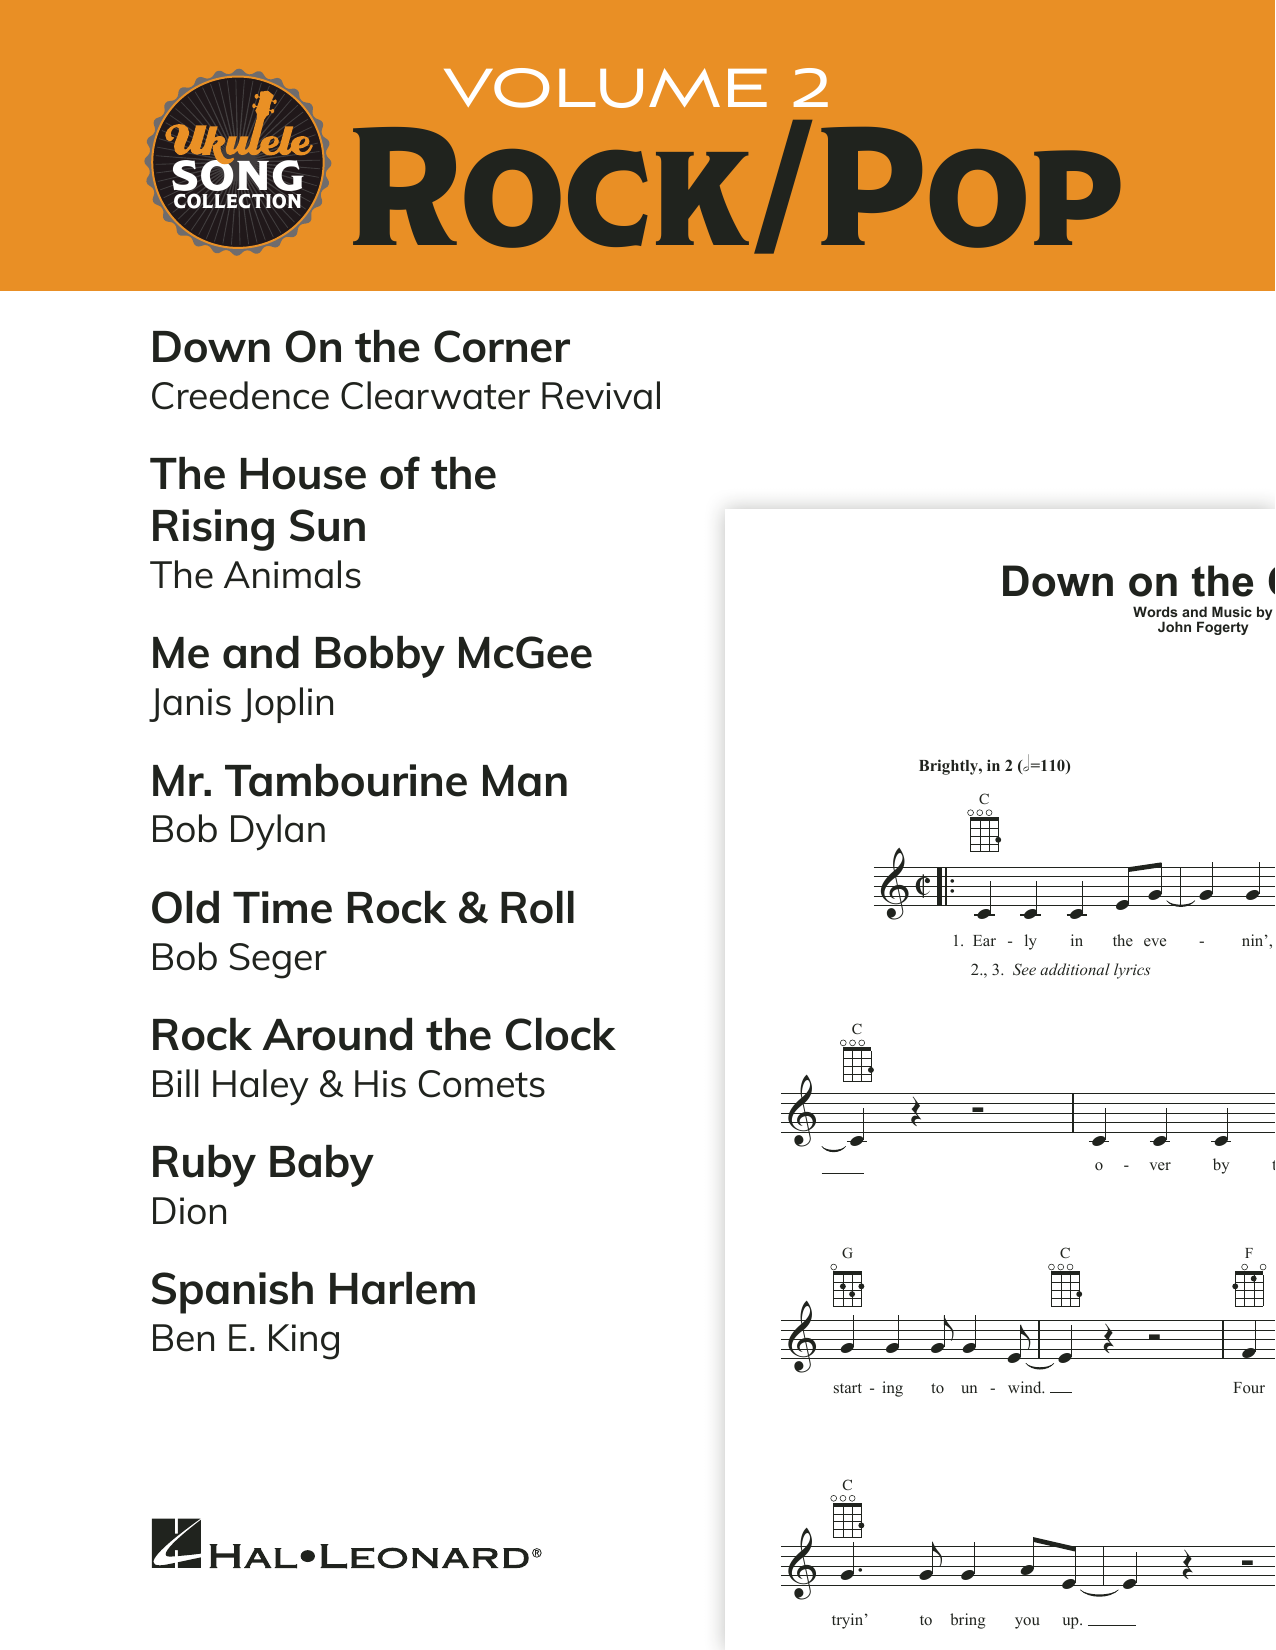 Various Ukulele Song Collection, Volume 2: Rock/Pop Sheet Music Notes & Chords for Ukulele Collection - Download or Print PDF